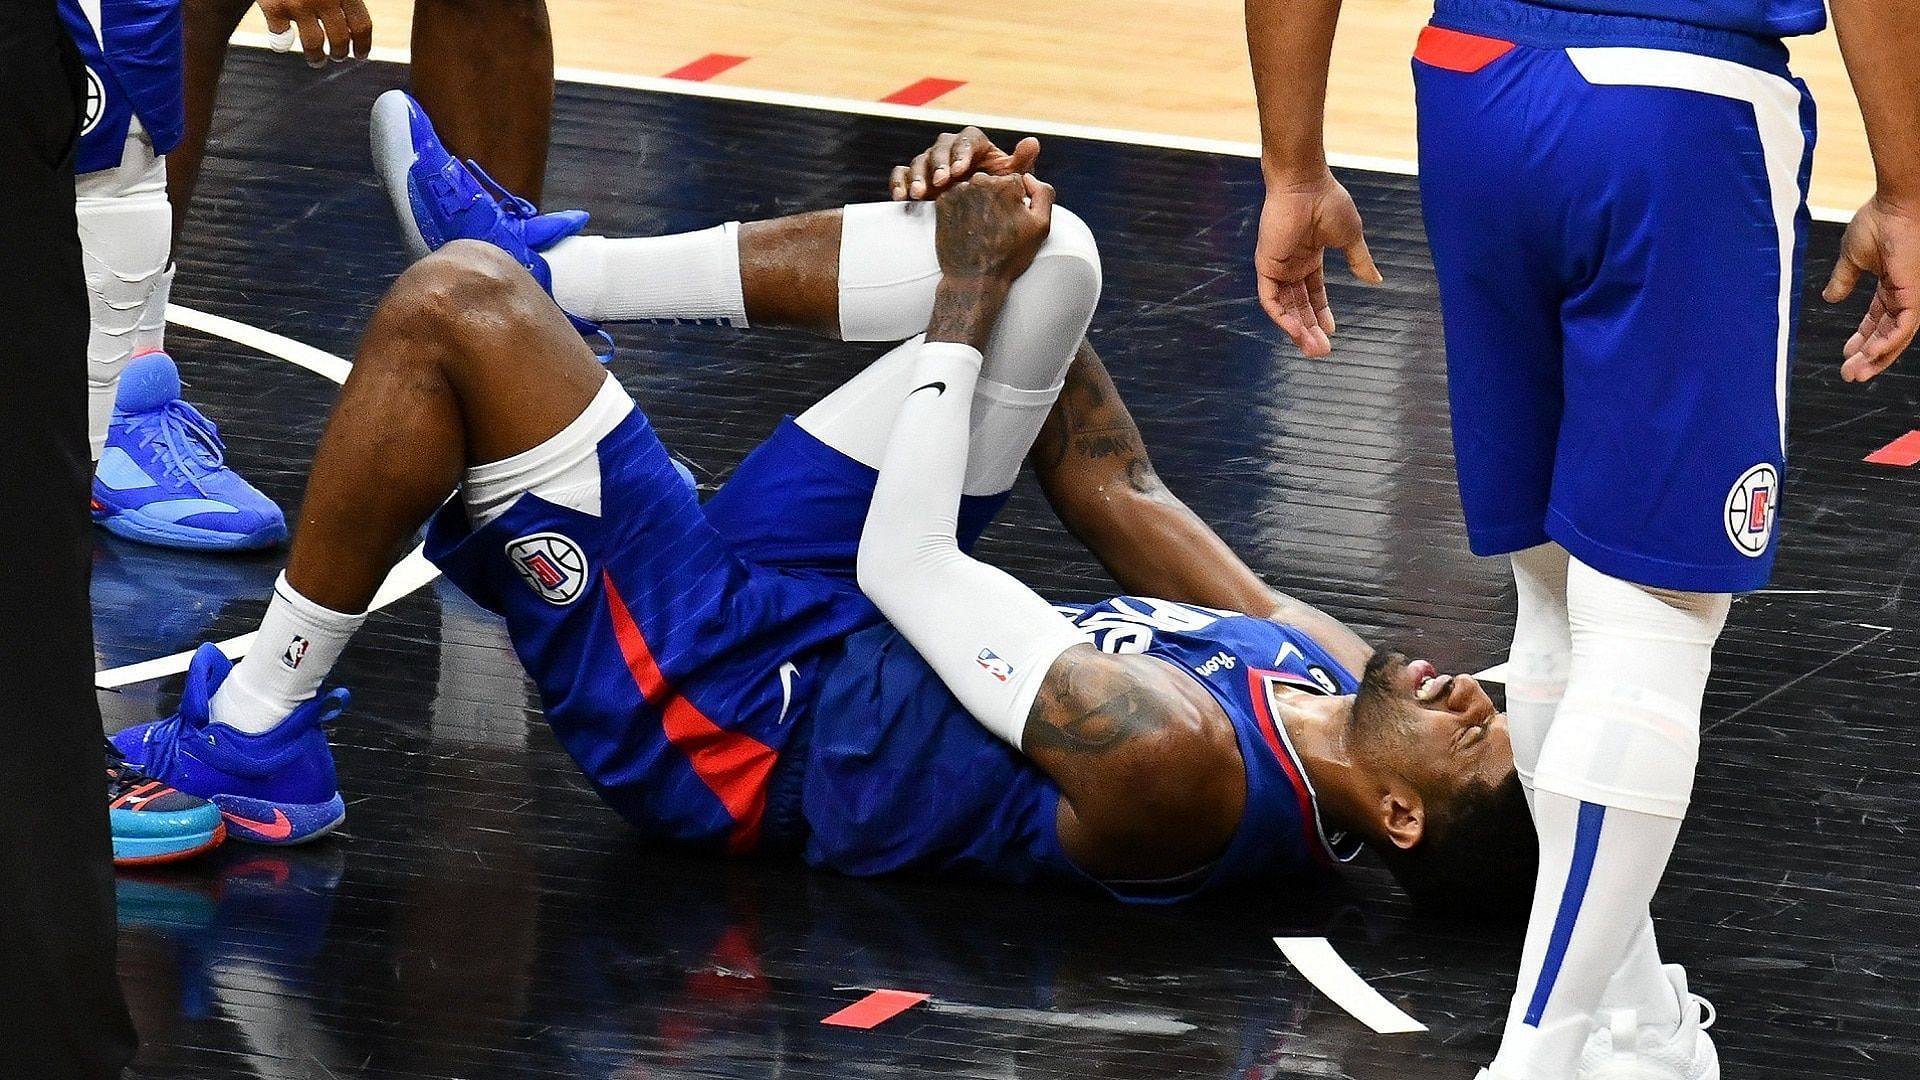 Paul George suffered a knee injury on Tuesday. (Photo: NBA.com)